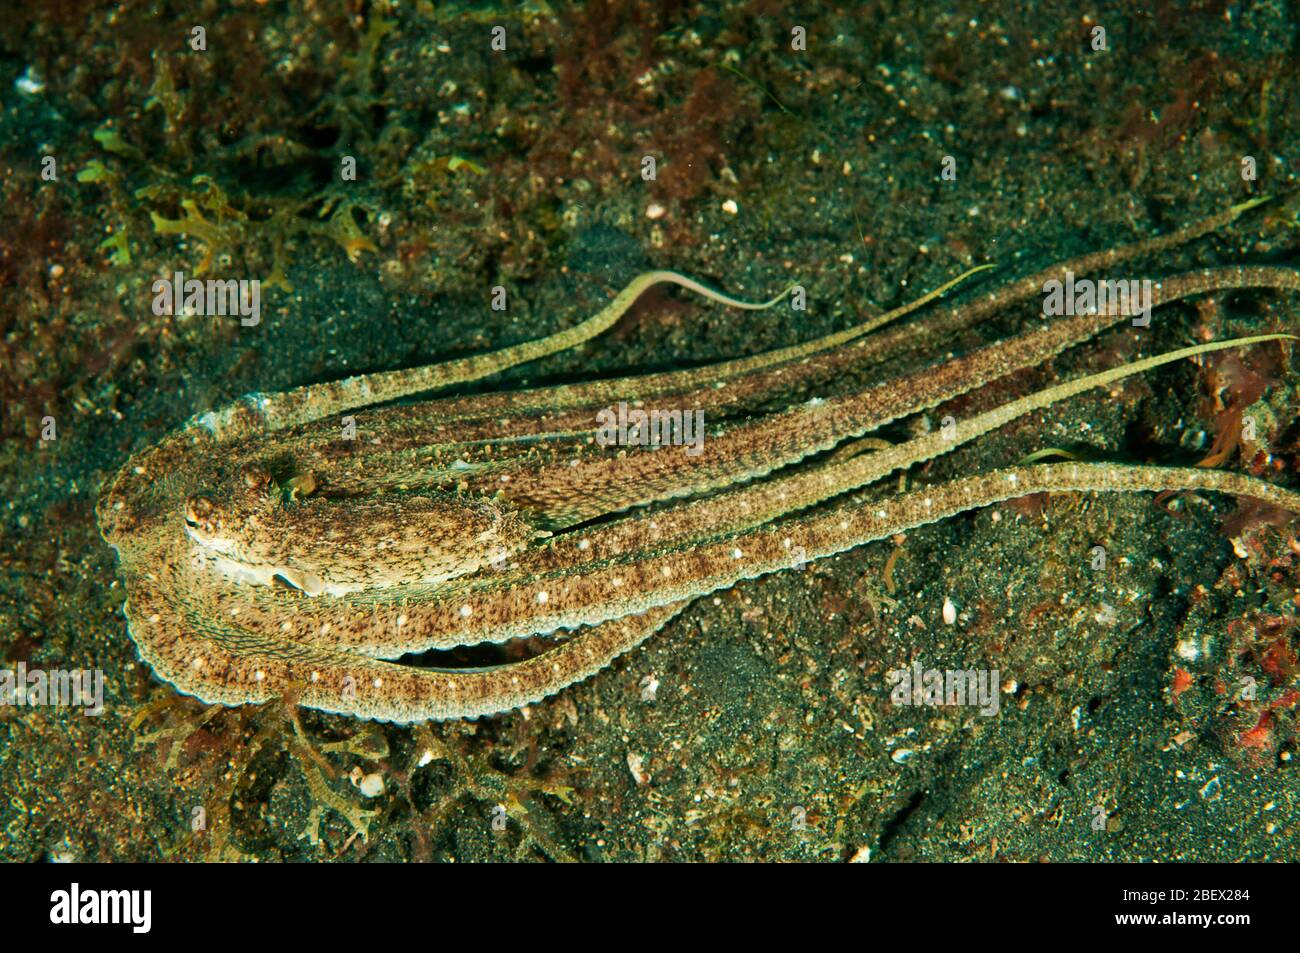 Longarm octopus, Abdopus sp., Lembeh Strait Sulawesi Indonesia Stock Photo